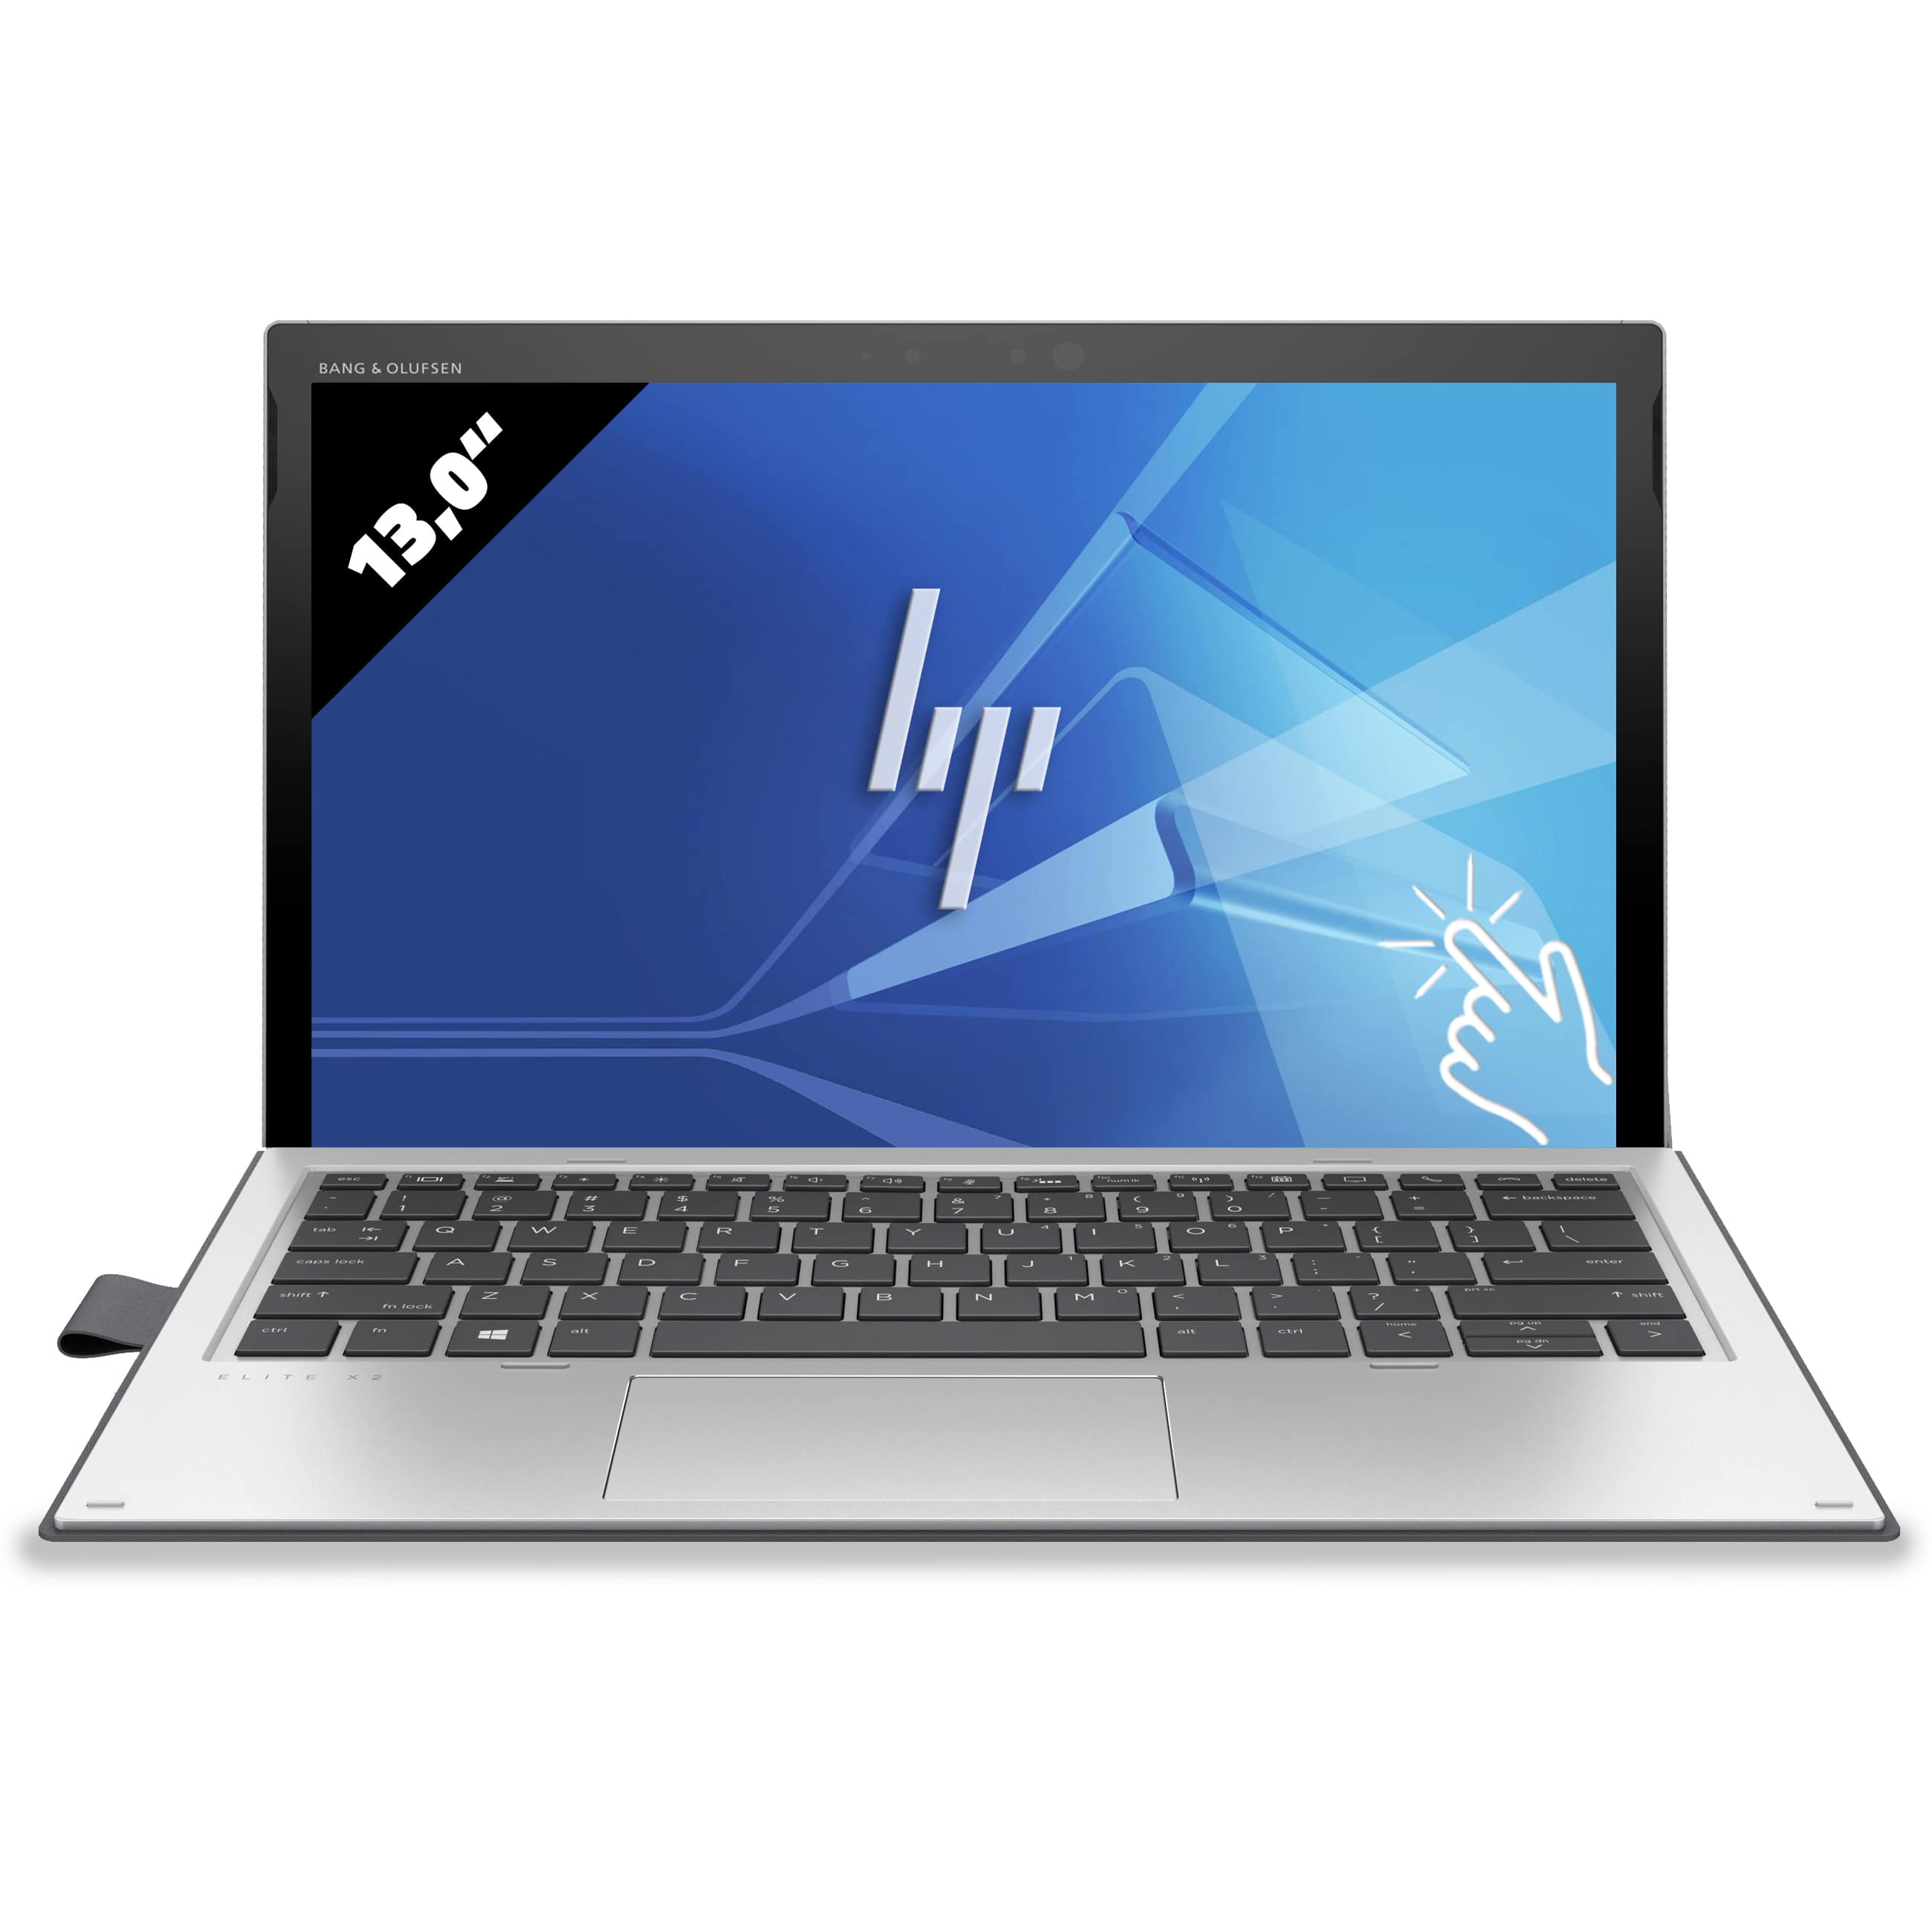 HP Elite x2 1013 G3 

 - 13,0 Zoll - Intel Core i5 8250U @ 1,6 GHz - 16 GB DDR3 - 250 GB SSD - 1920 x 1280 - Touchscreen - Windows 10 Professional